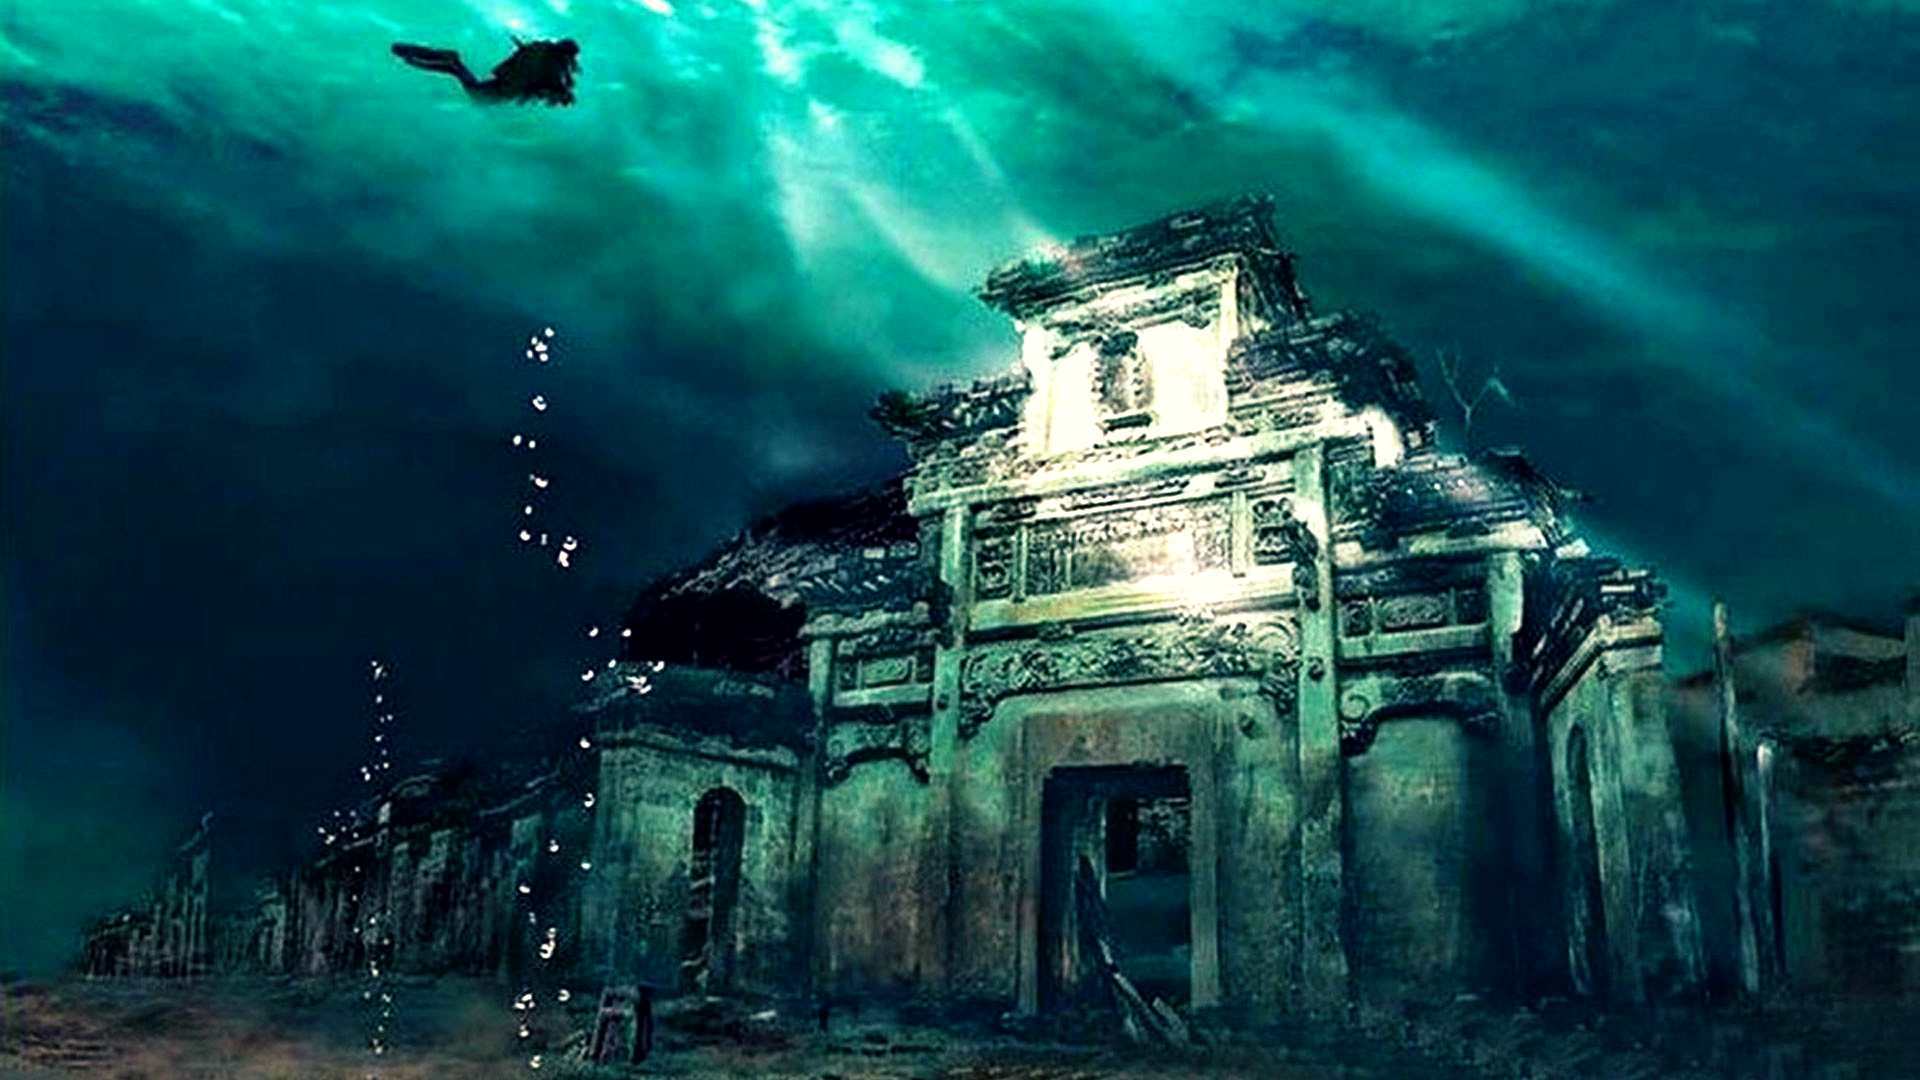 Underwater City In Shicheng, China